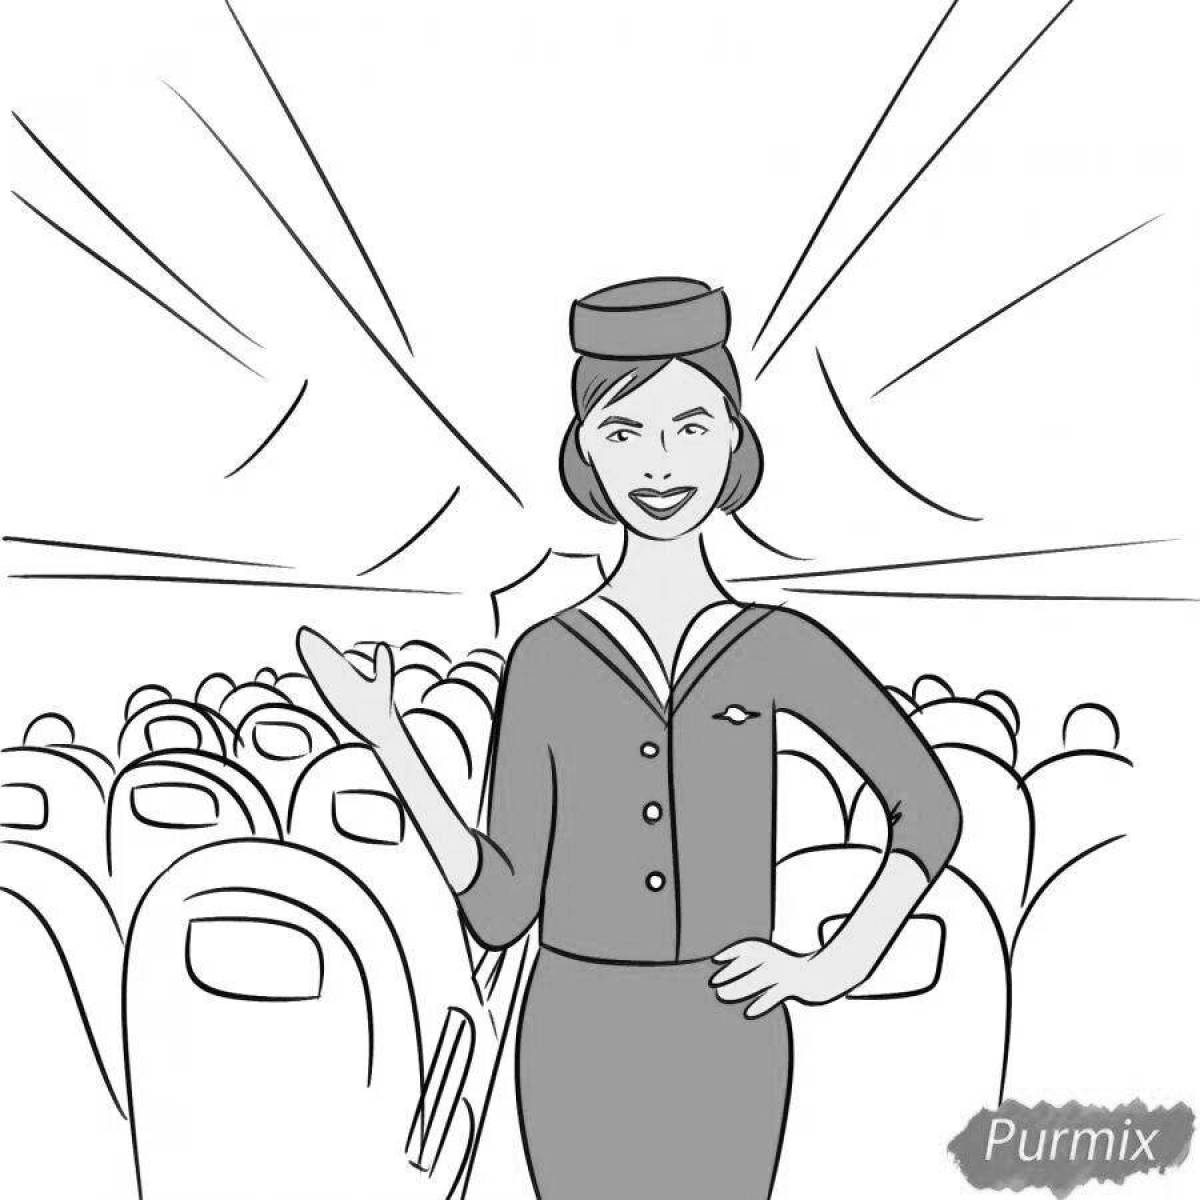 Creative stewardess coloring book